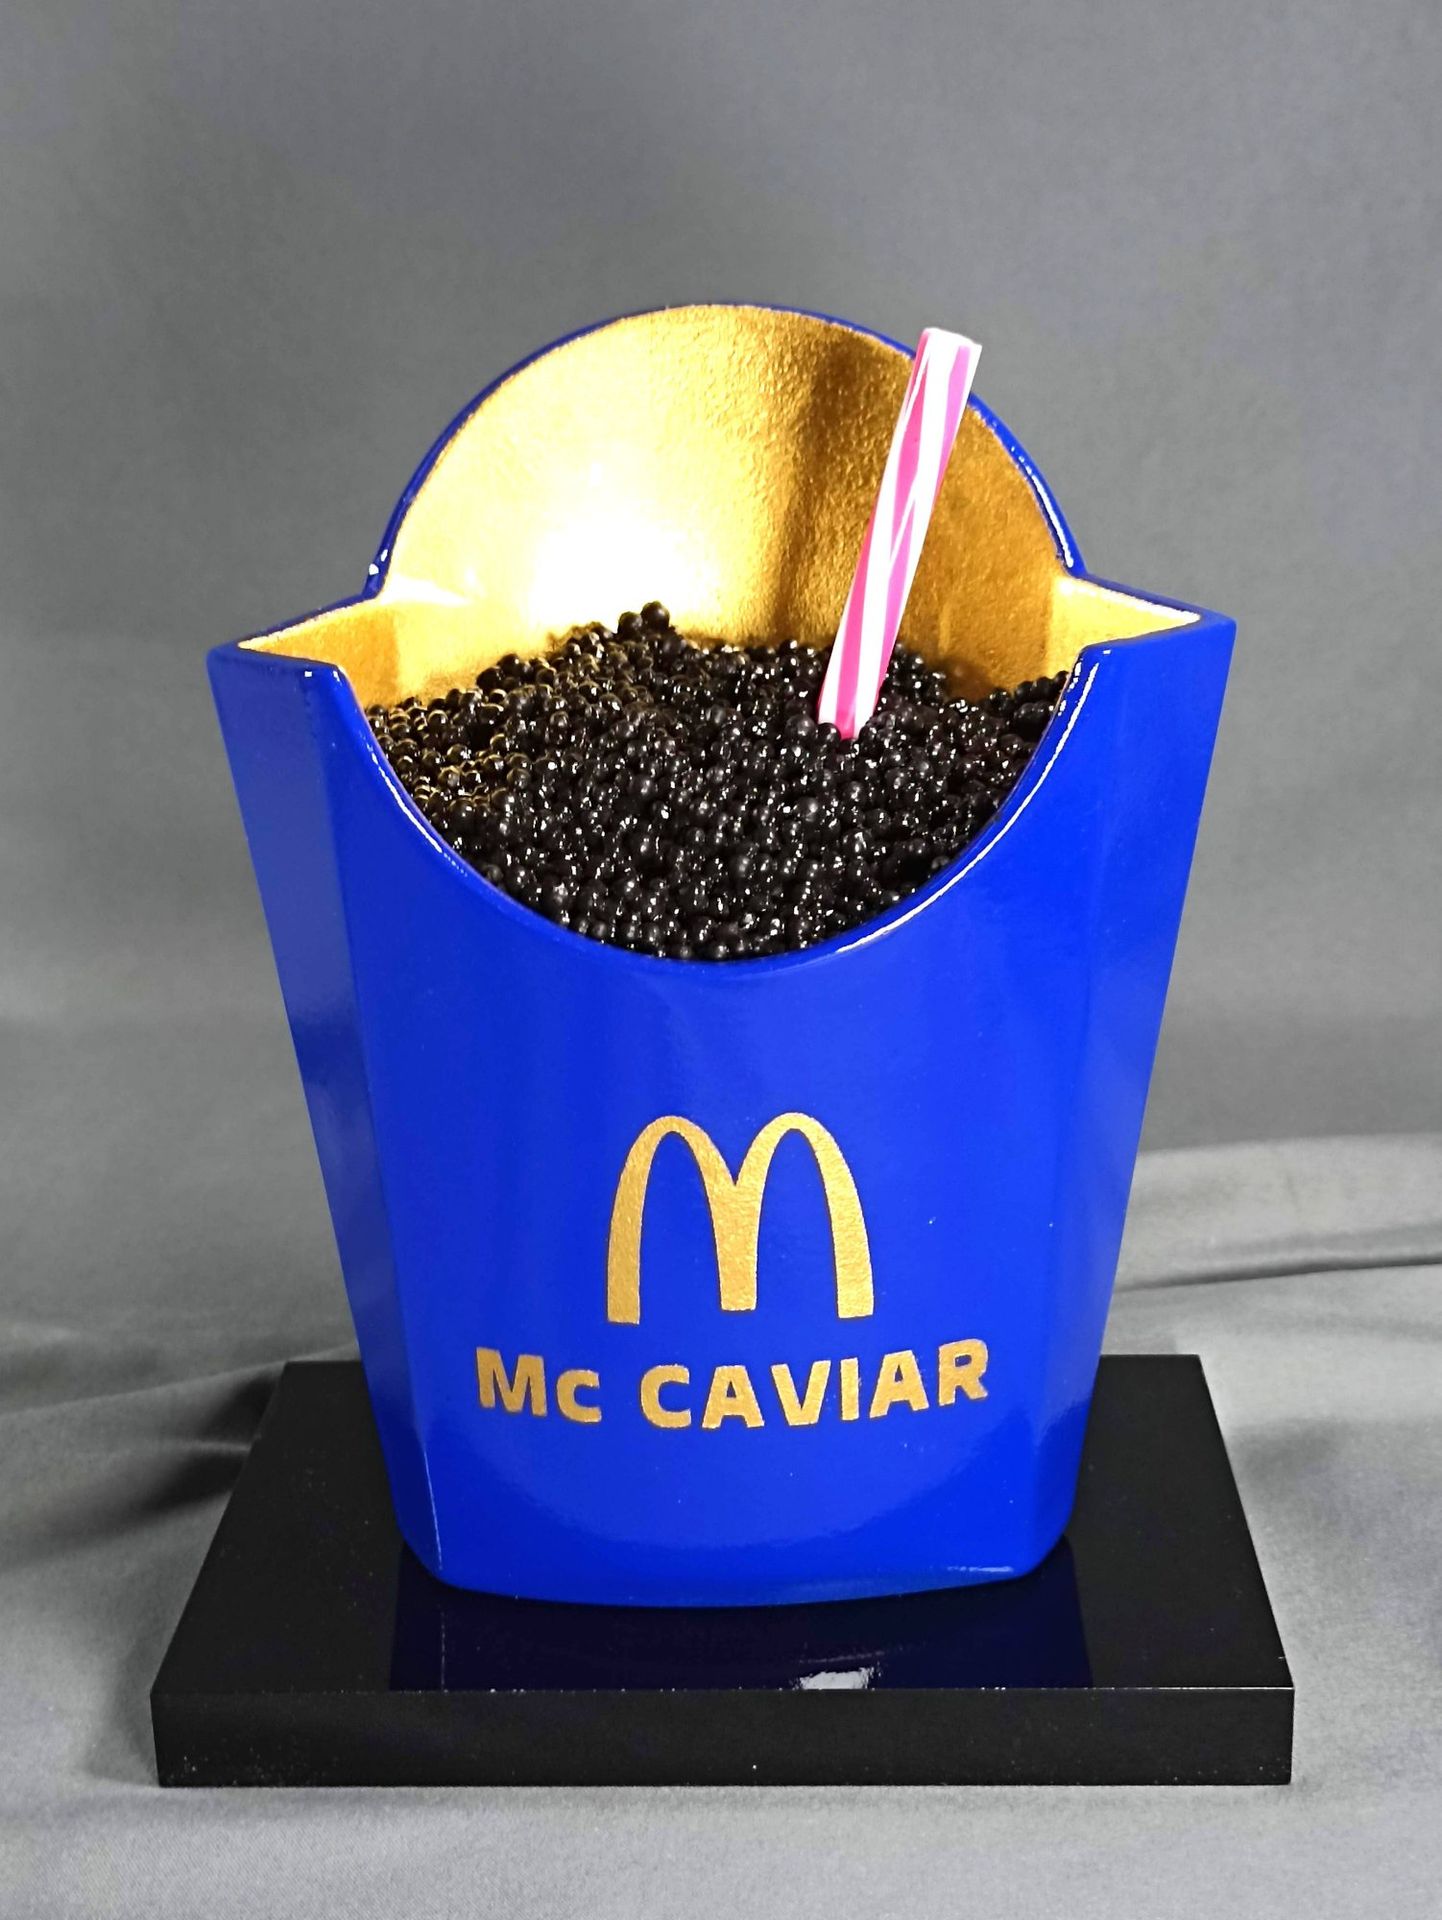 XTC MC CAVIAR 19CM AZUL BRILLANTE - PAJITA TURQUESA 2/8
Gran cono Mc Caviar azul&hellip;